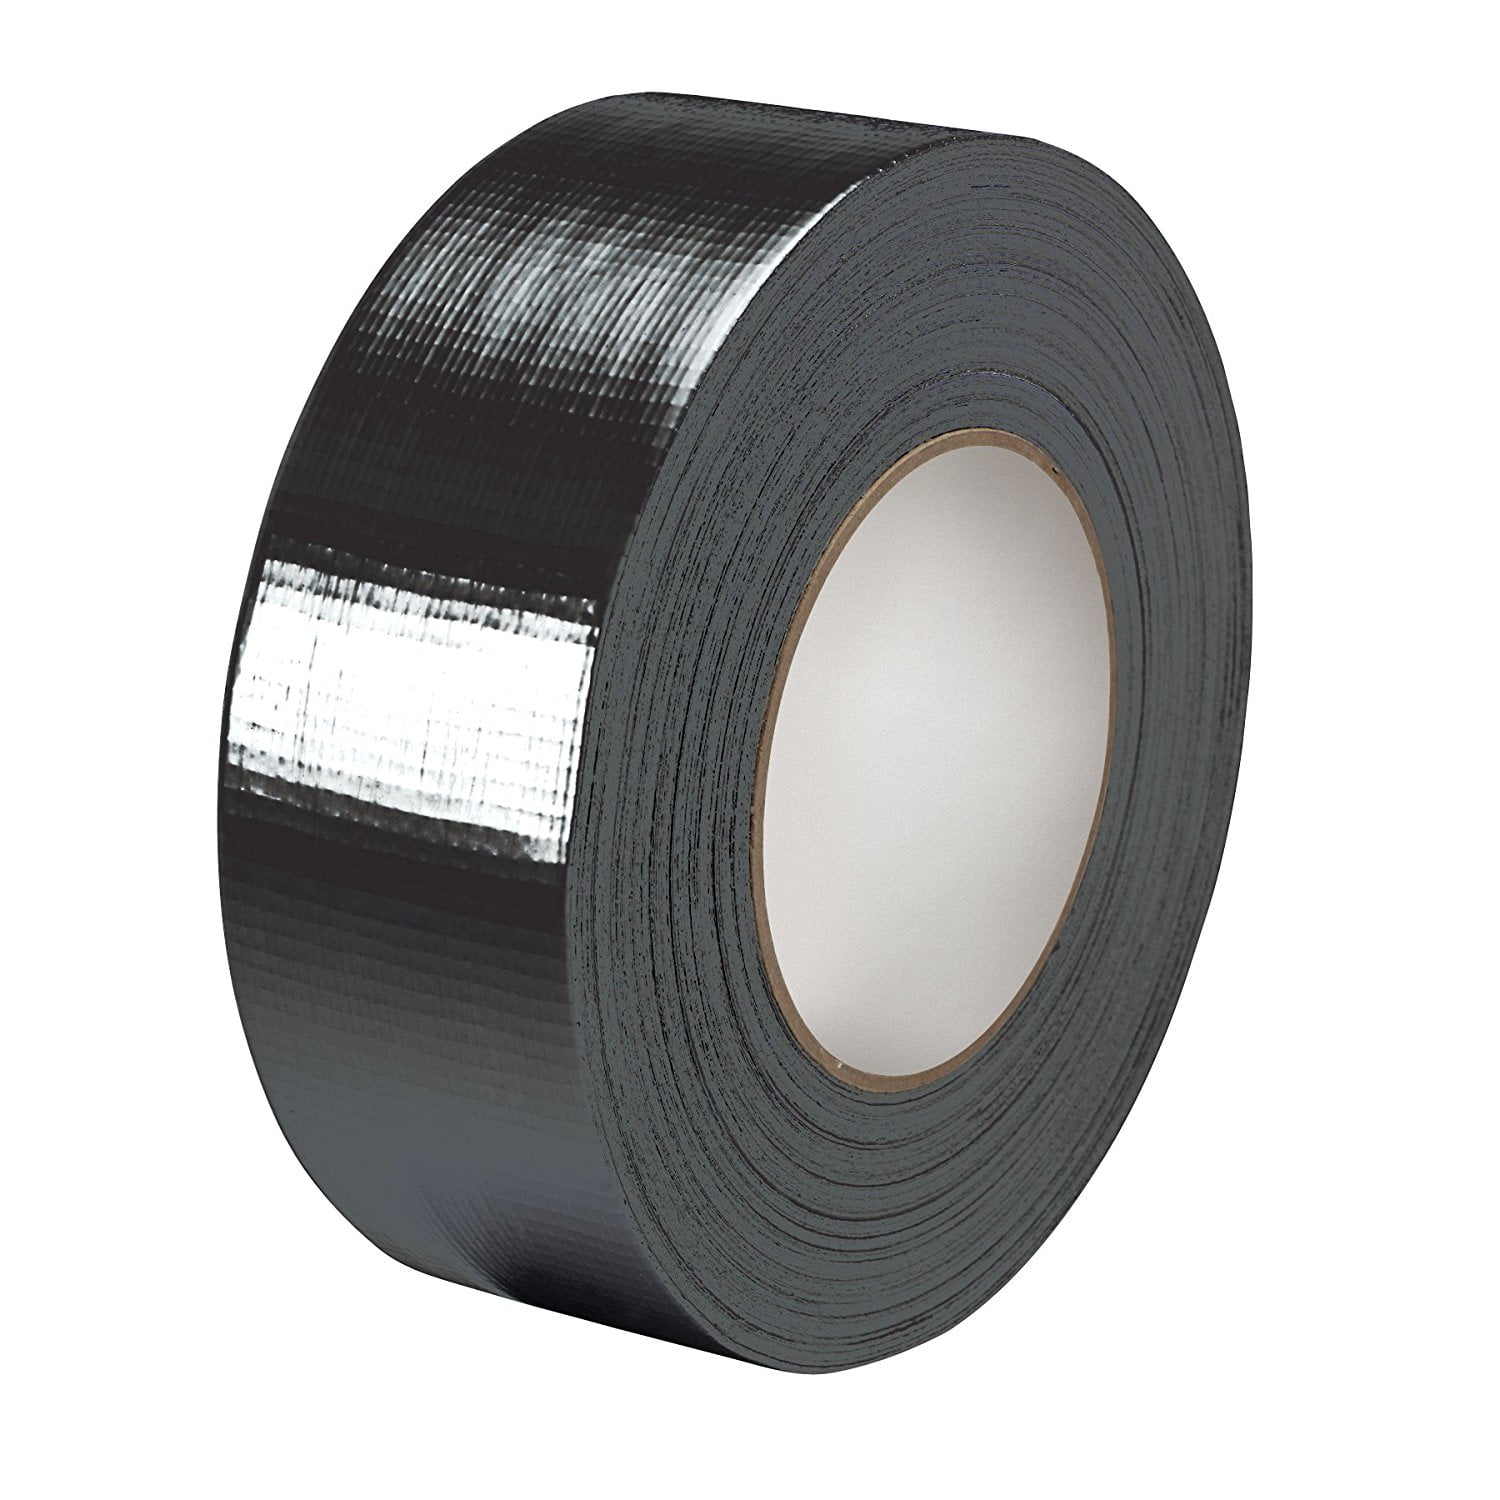 3M Duct Tape Black 48 Millimeter by 54.8 Meter 